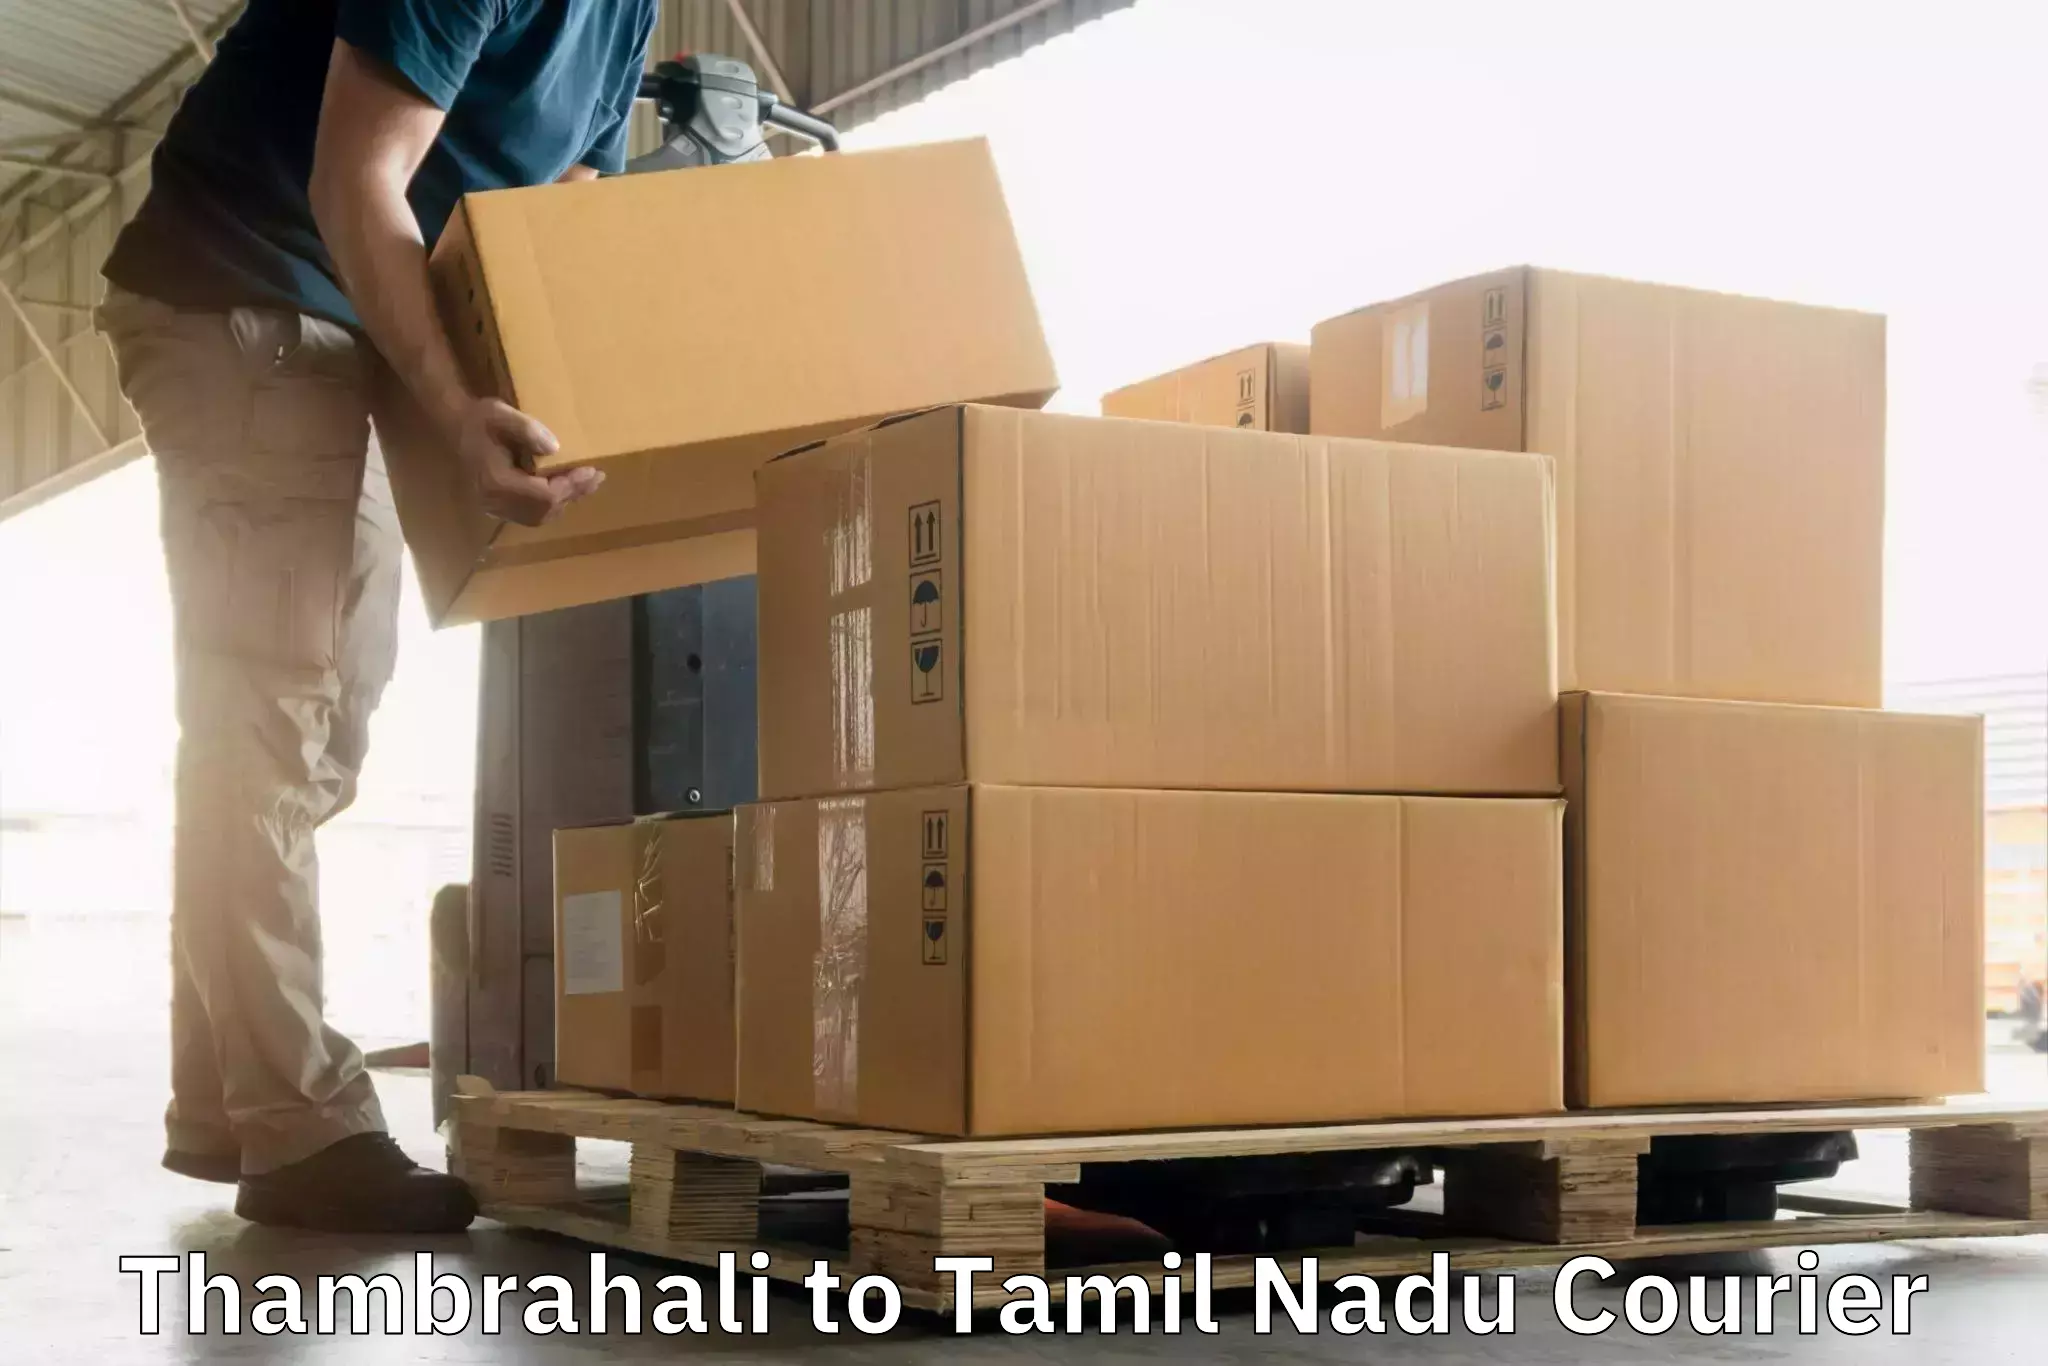 Efficient parcel transport Thambrahali to Tamil Nadu